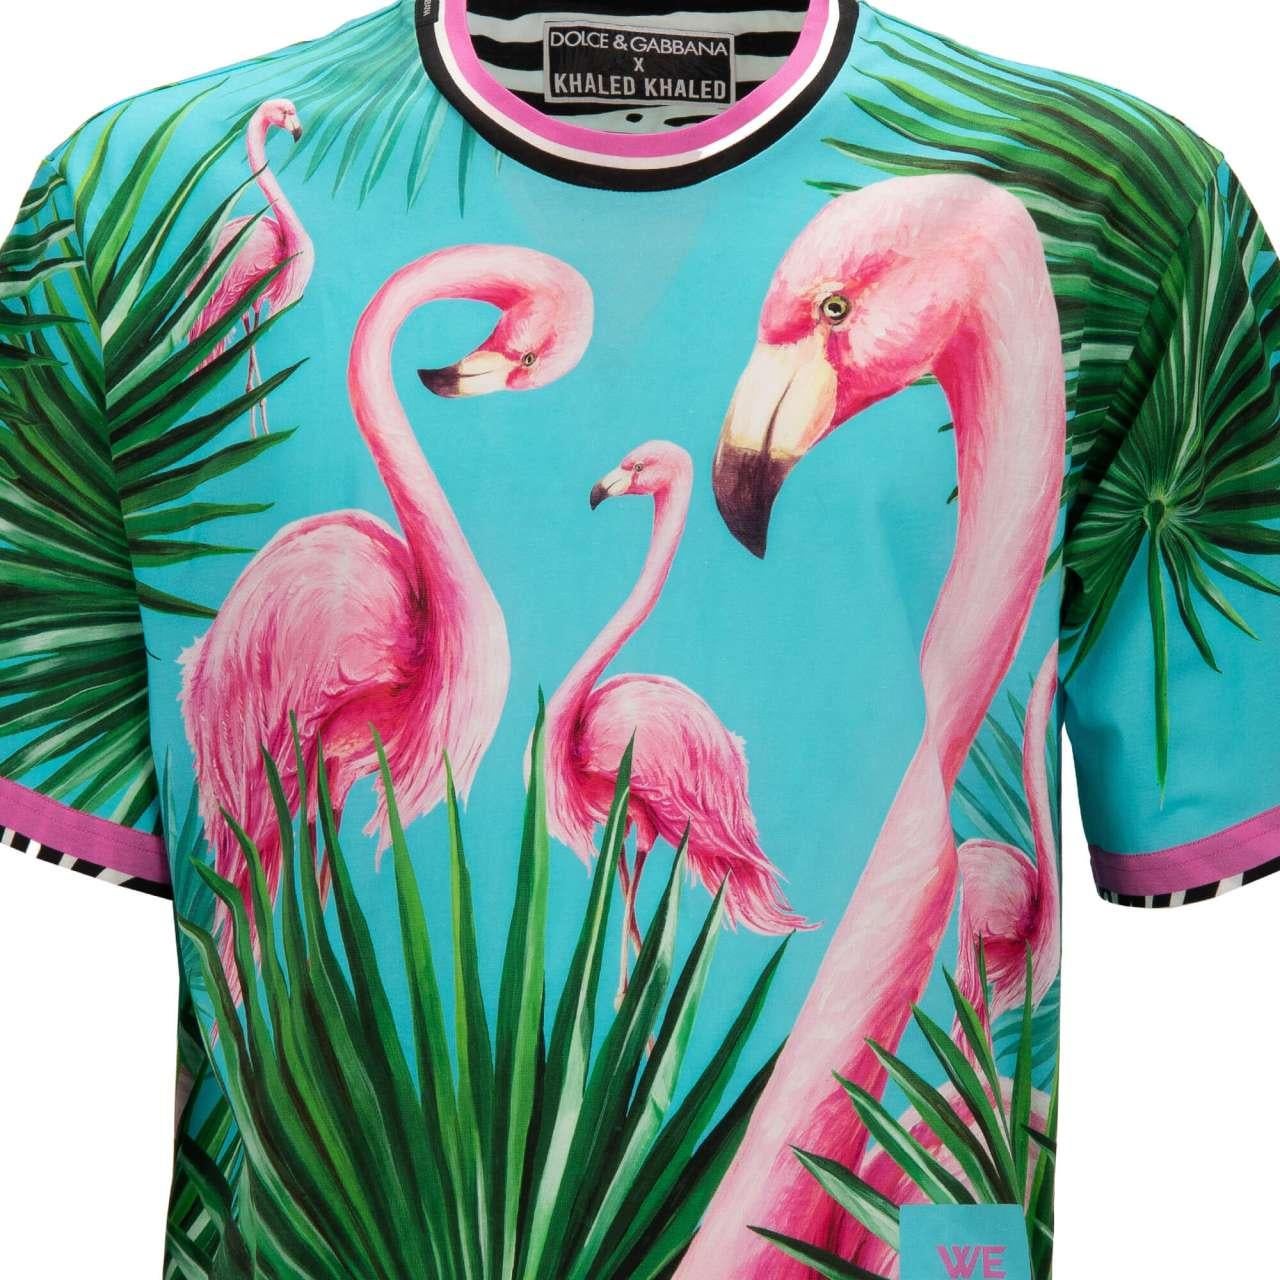 D&G - DJ Khaled Oversize T-Shirt with Flamingo Zebra Print Pink Blue 58 In Excellent Condition For Sale In Erkrath, DE